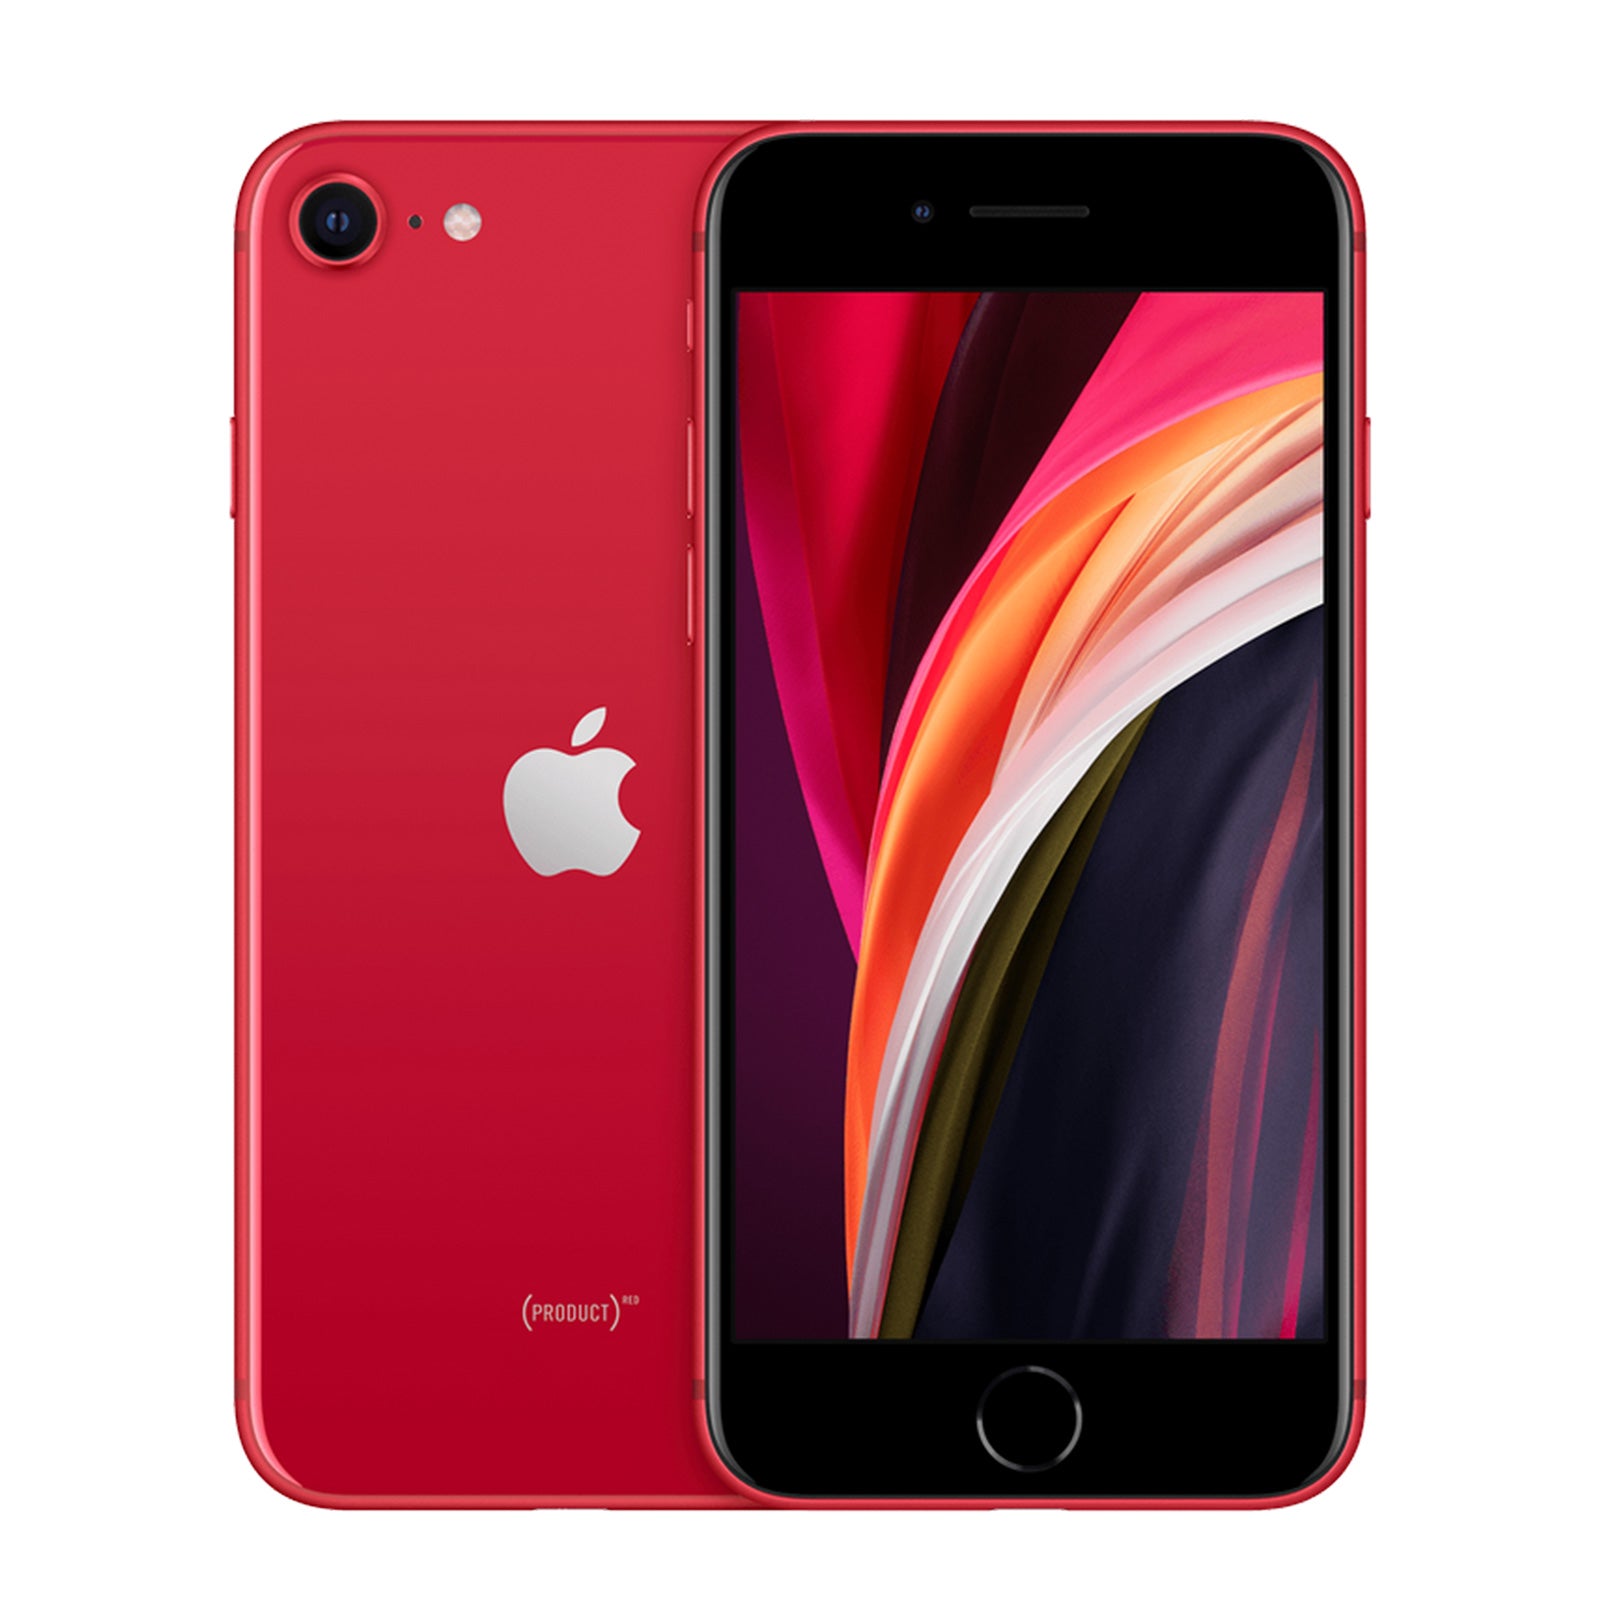 Apple iPhone SE 2nd Gen 256GB Red Very Good Unlocked